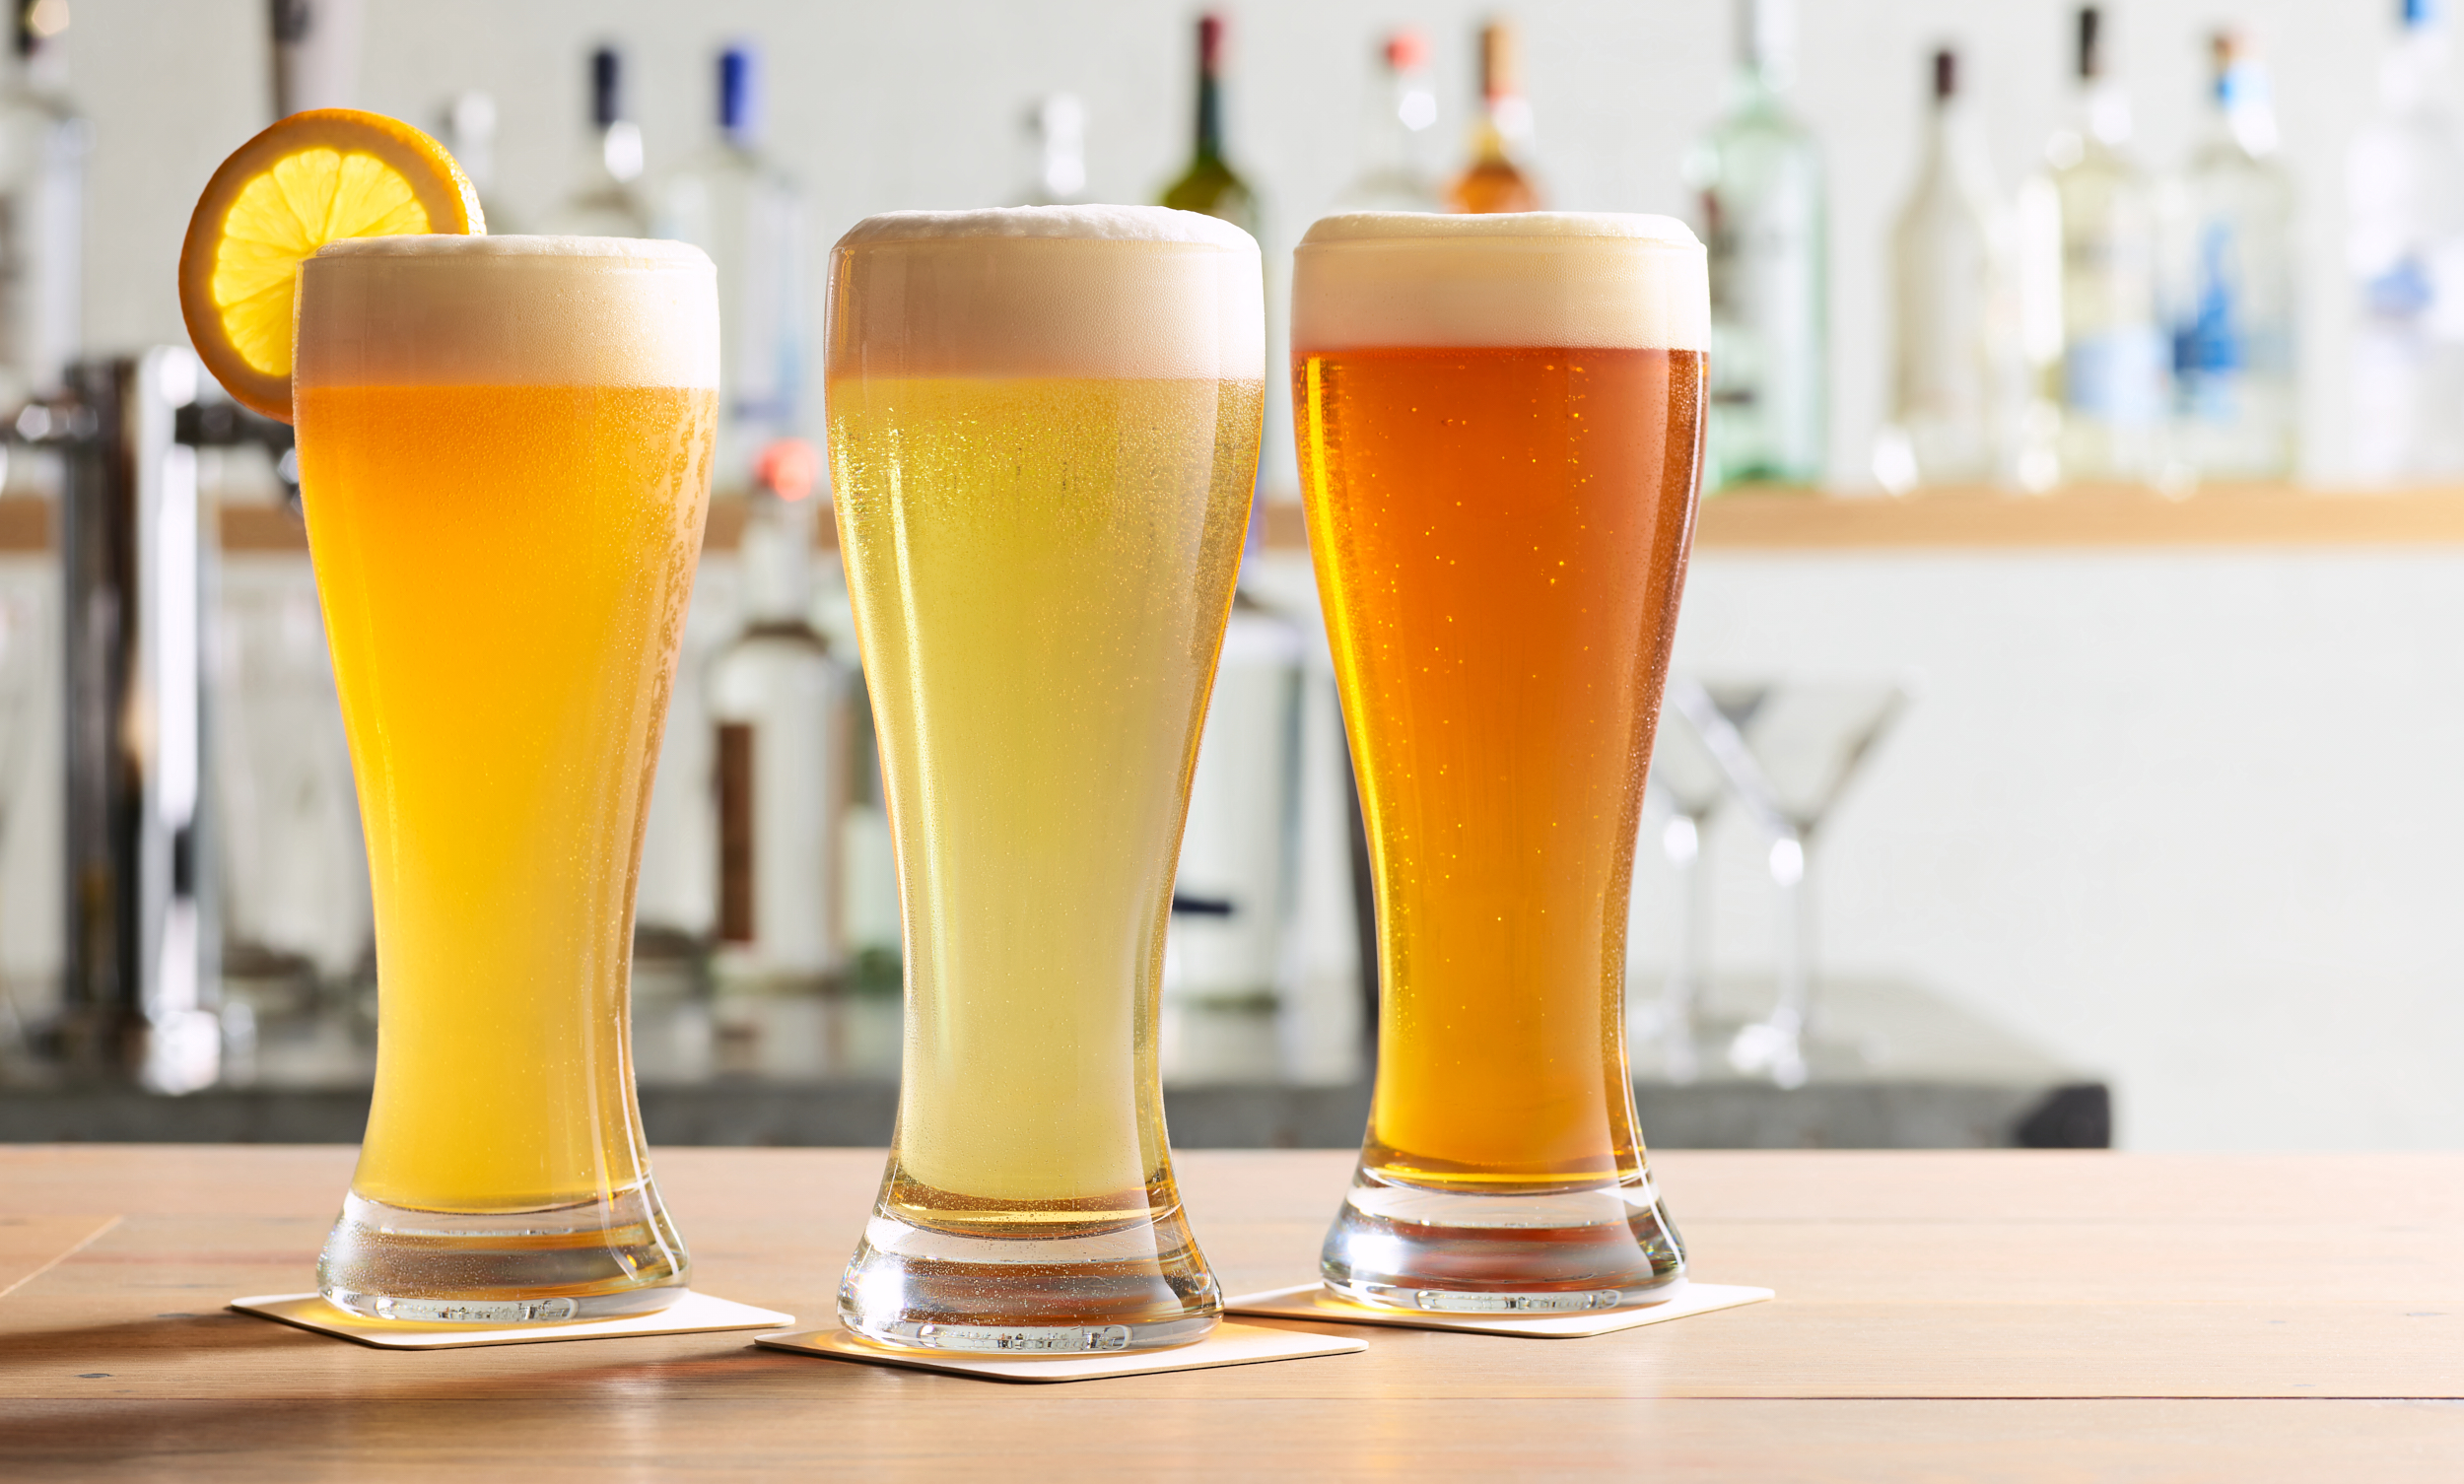 Three varieties of beers in a bar setting in a spectrum of colors.